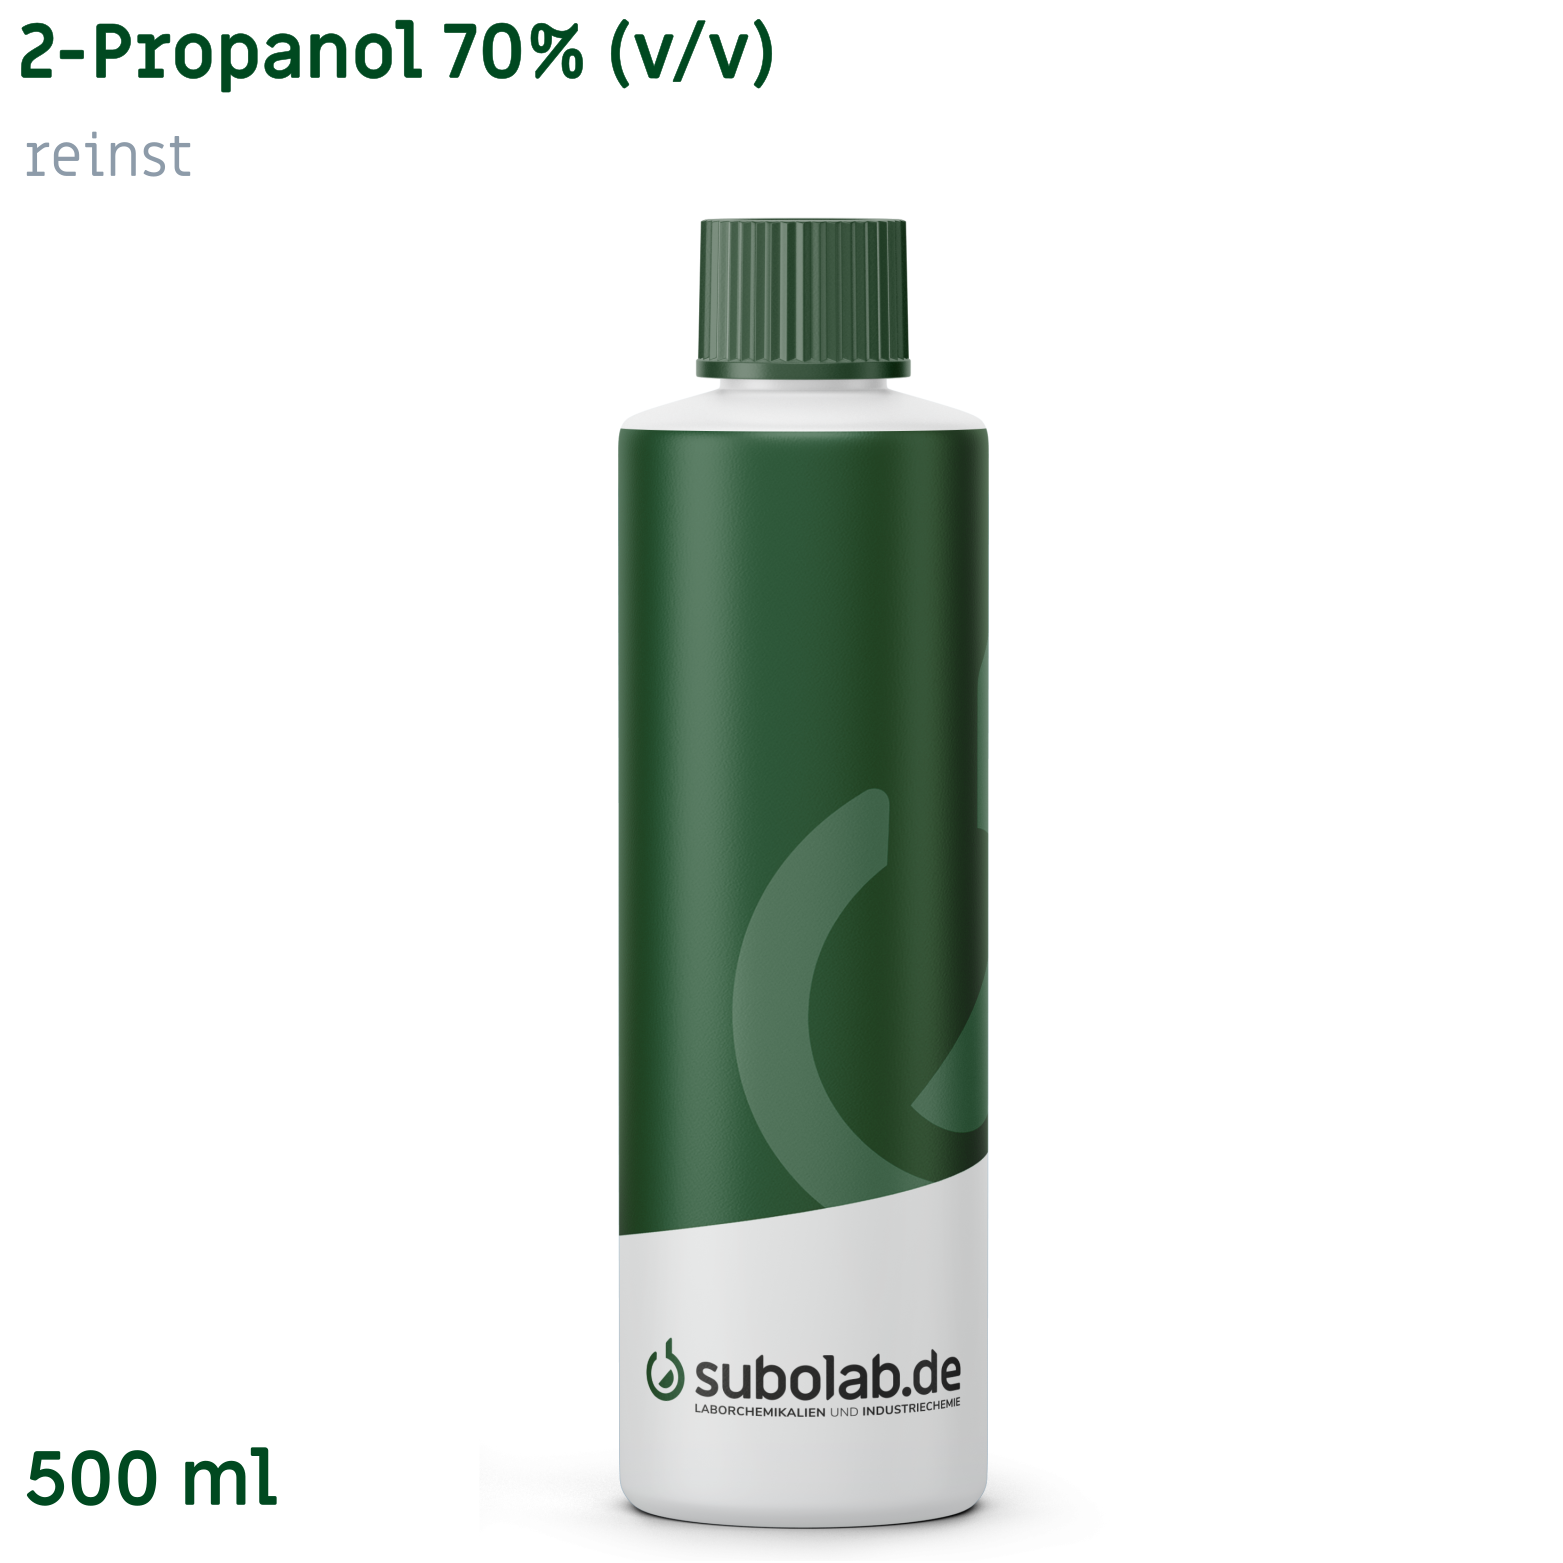 Bild von 2-Propanol 70% v/v reinst (500 ml)